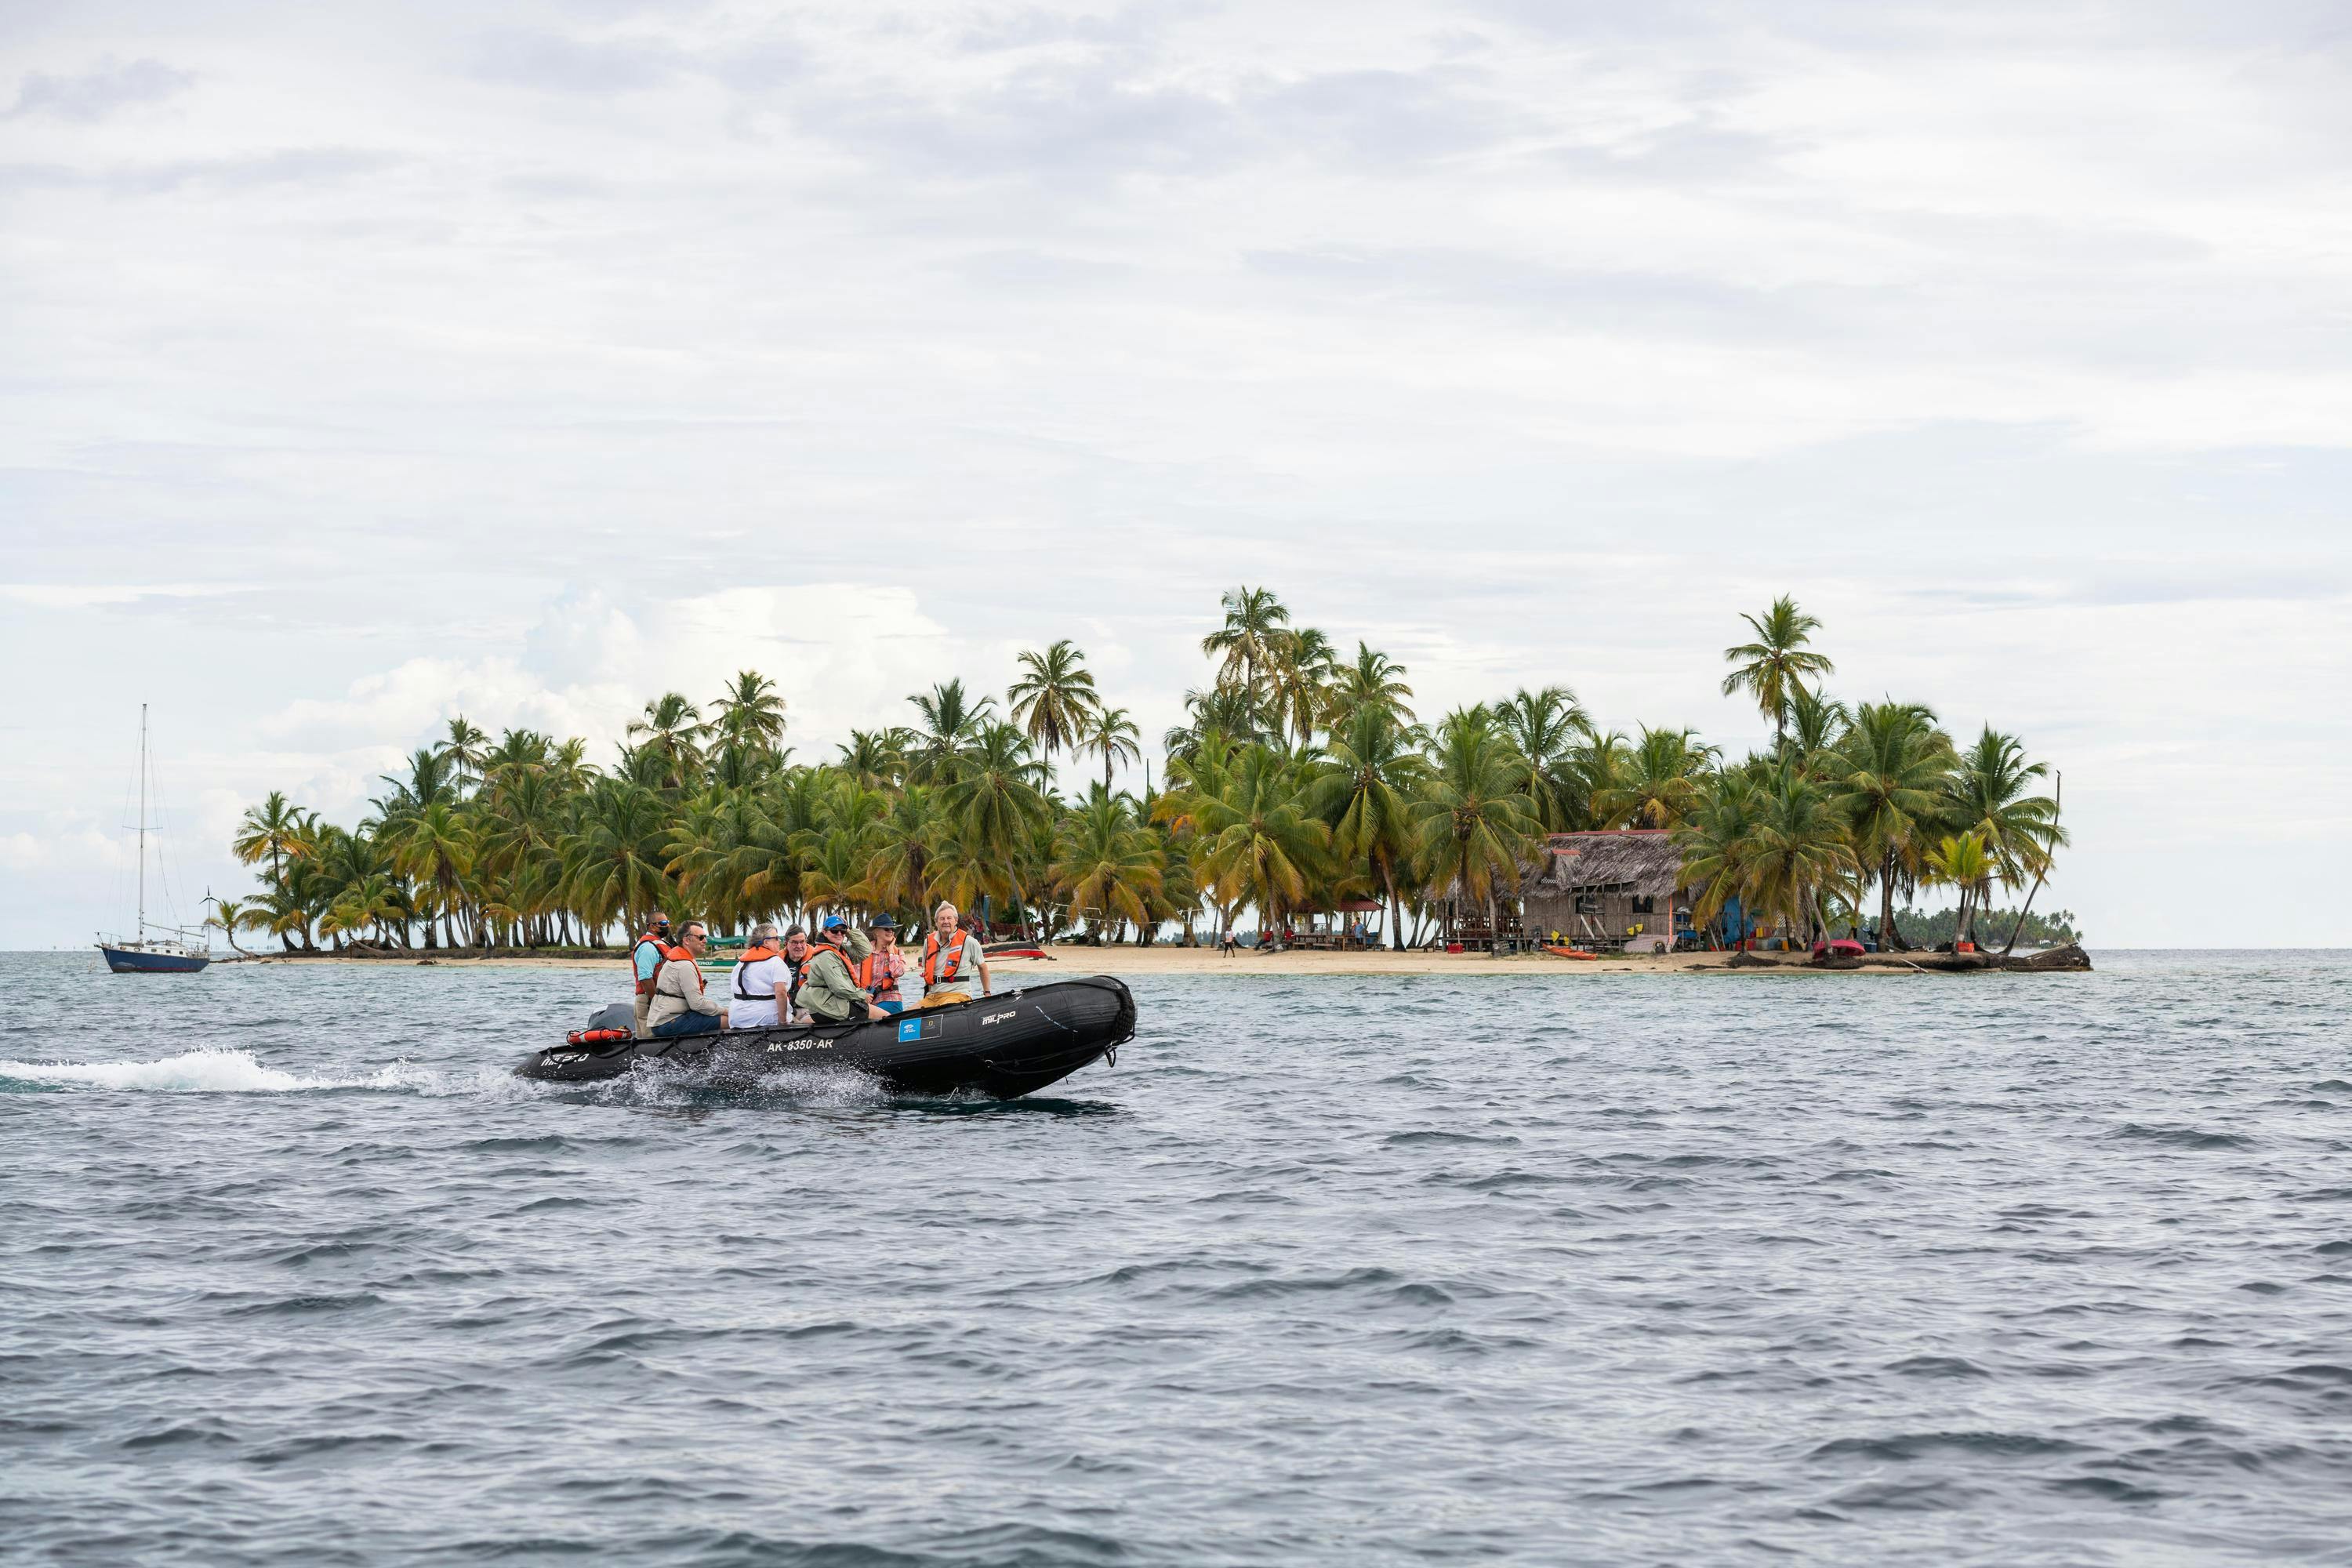 Zodiac cruise to visit the Guna community in Guna Yala, Panama. The Guna people, one of the very first indigenous groups to achieve autonomy in